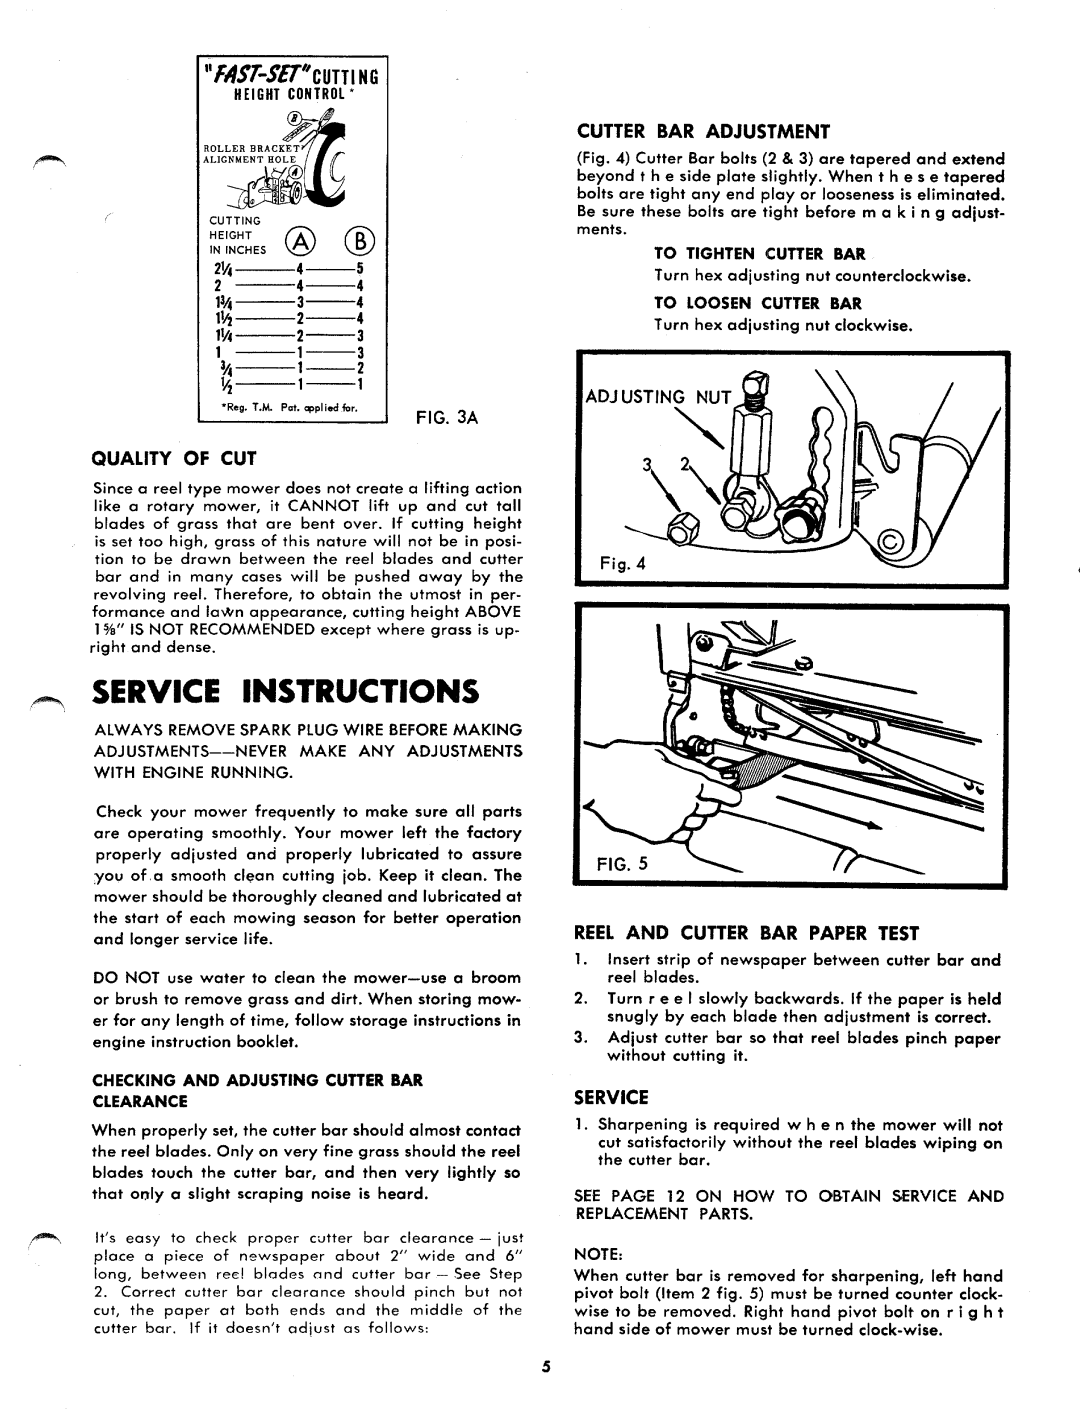 Yard-Man 1070-8 manual 